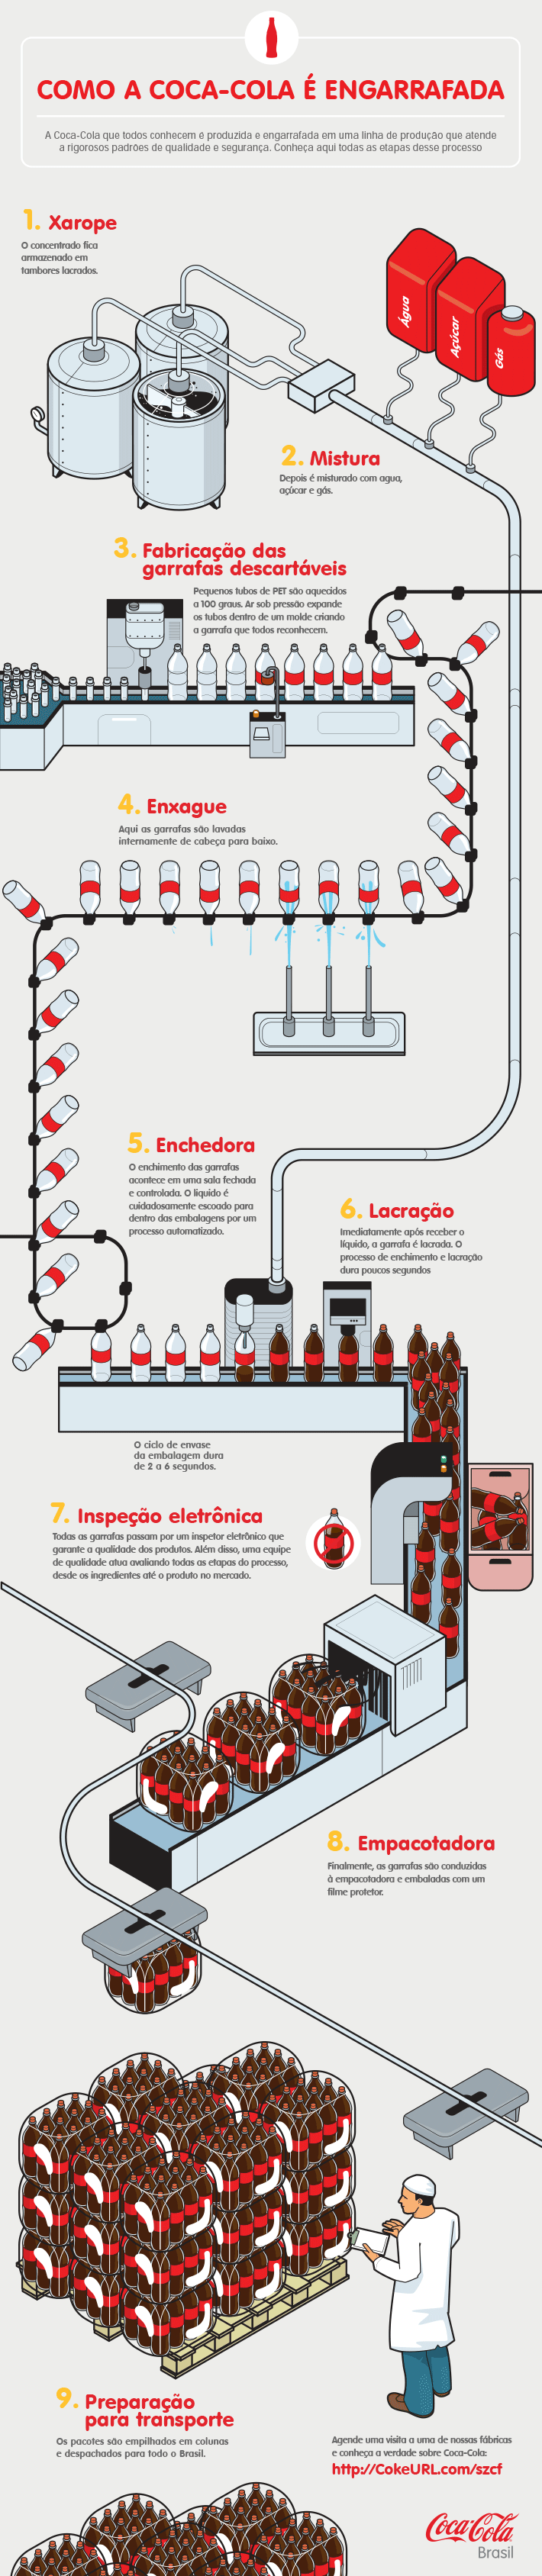 Coke soda bootling process